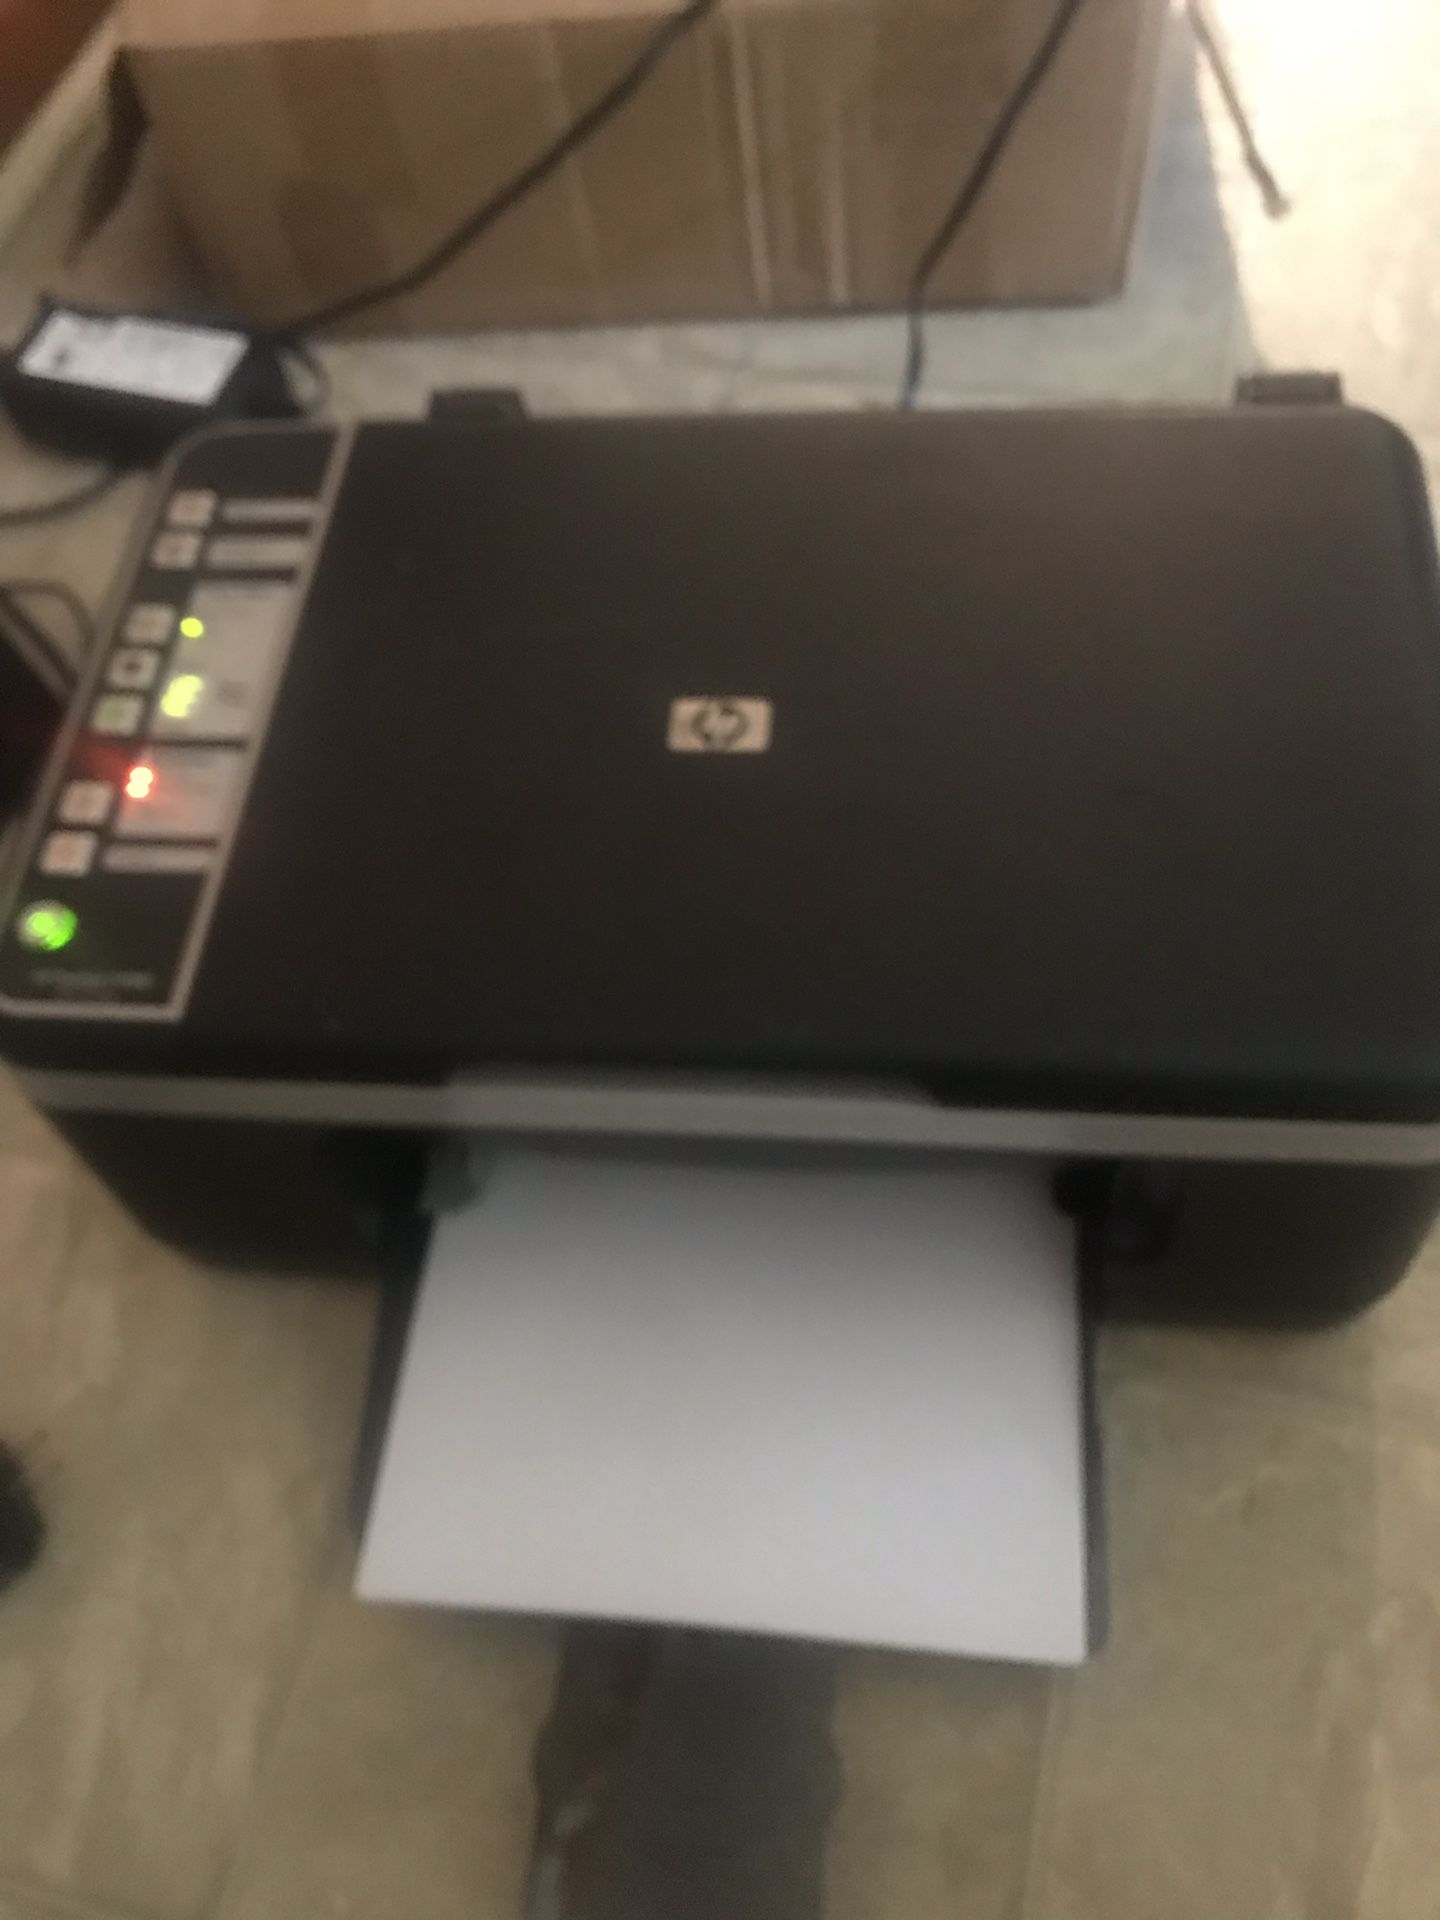 Hp printer